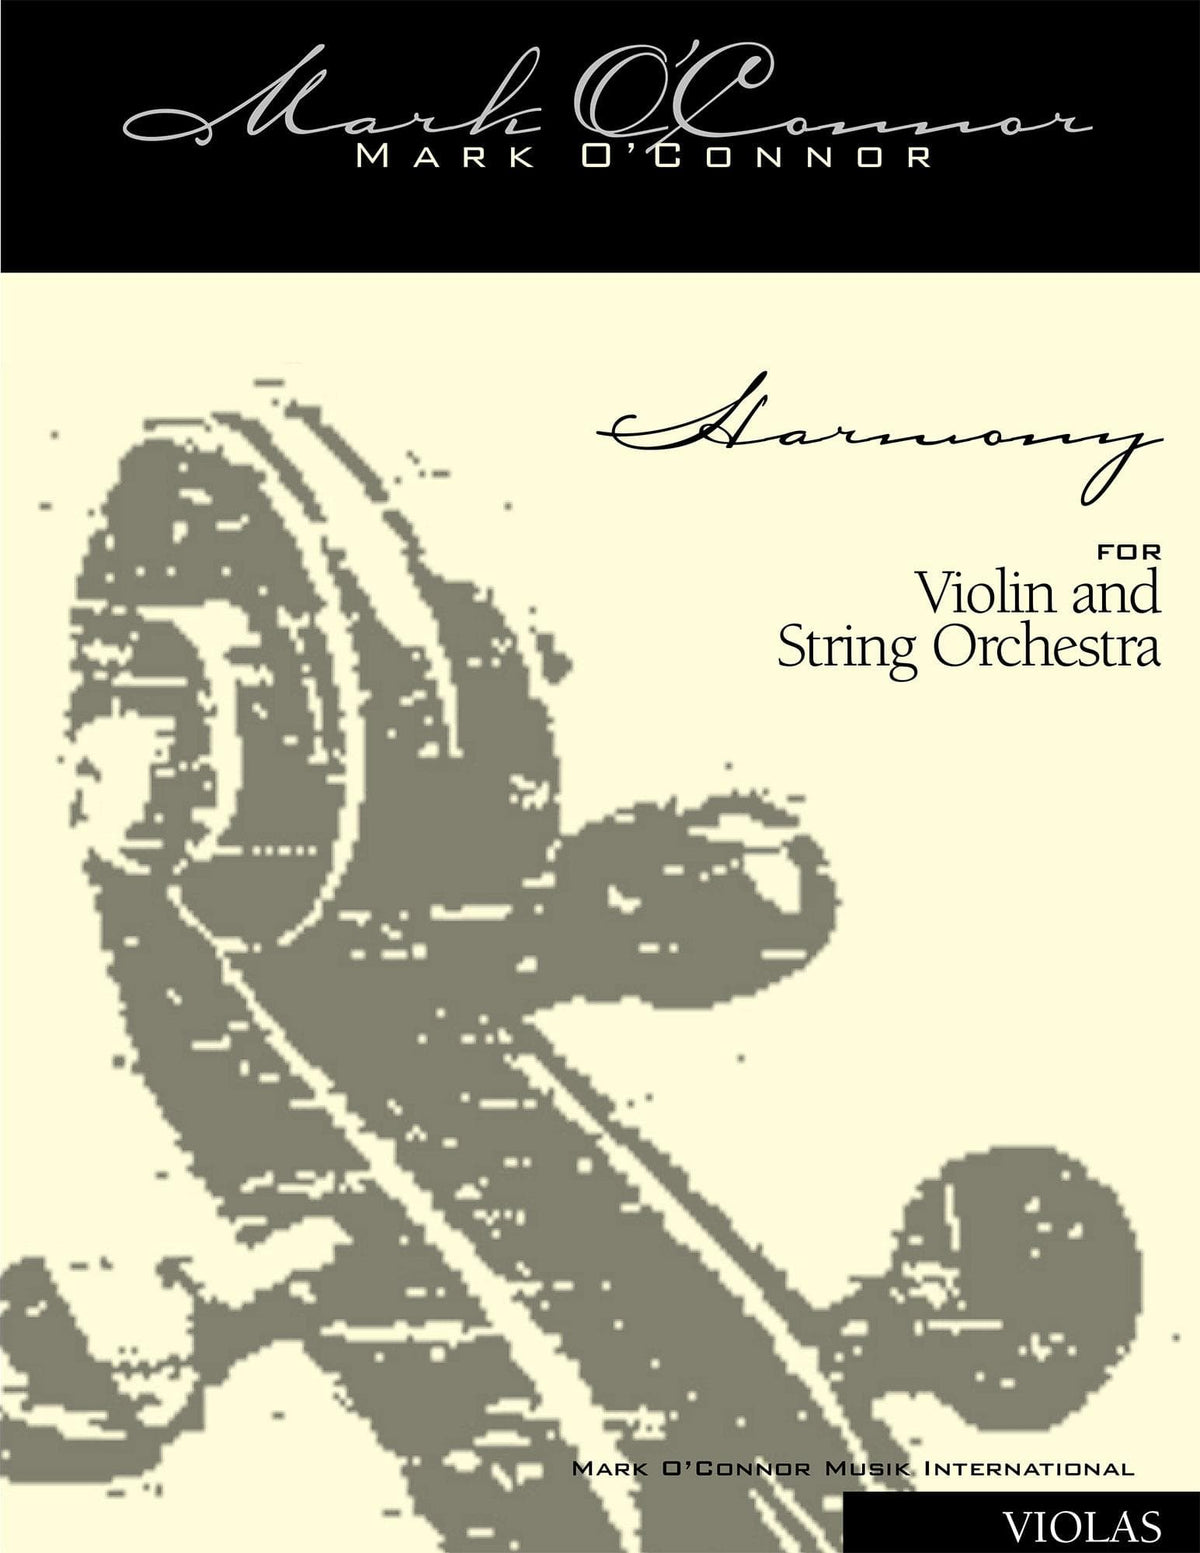 O'Connor, Mark - Harmony for Violin and Strings - Violas - Digital Download